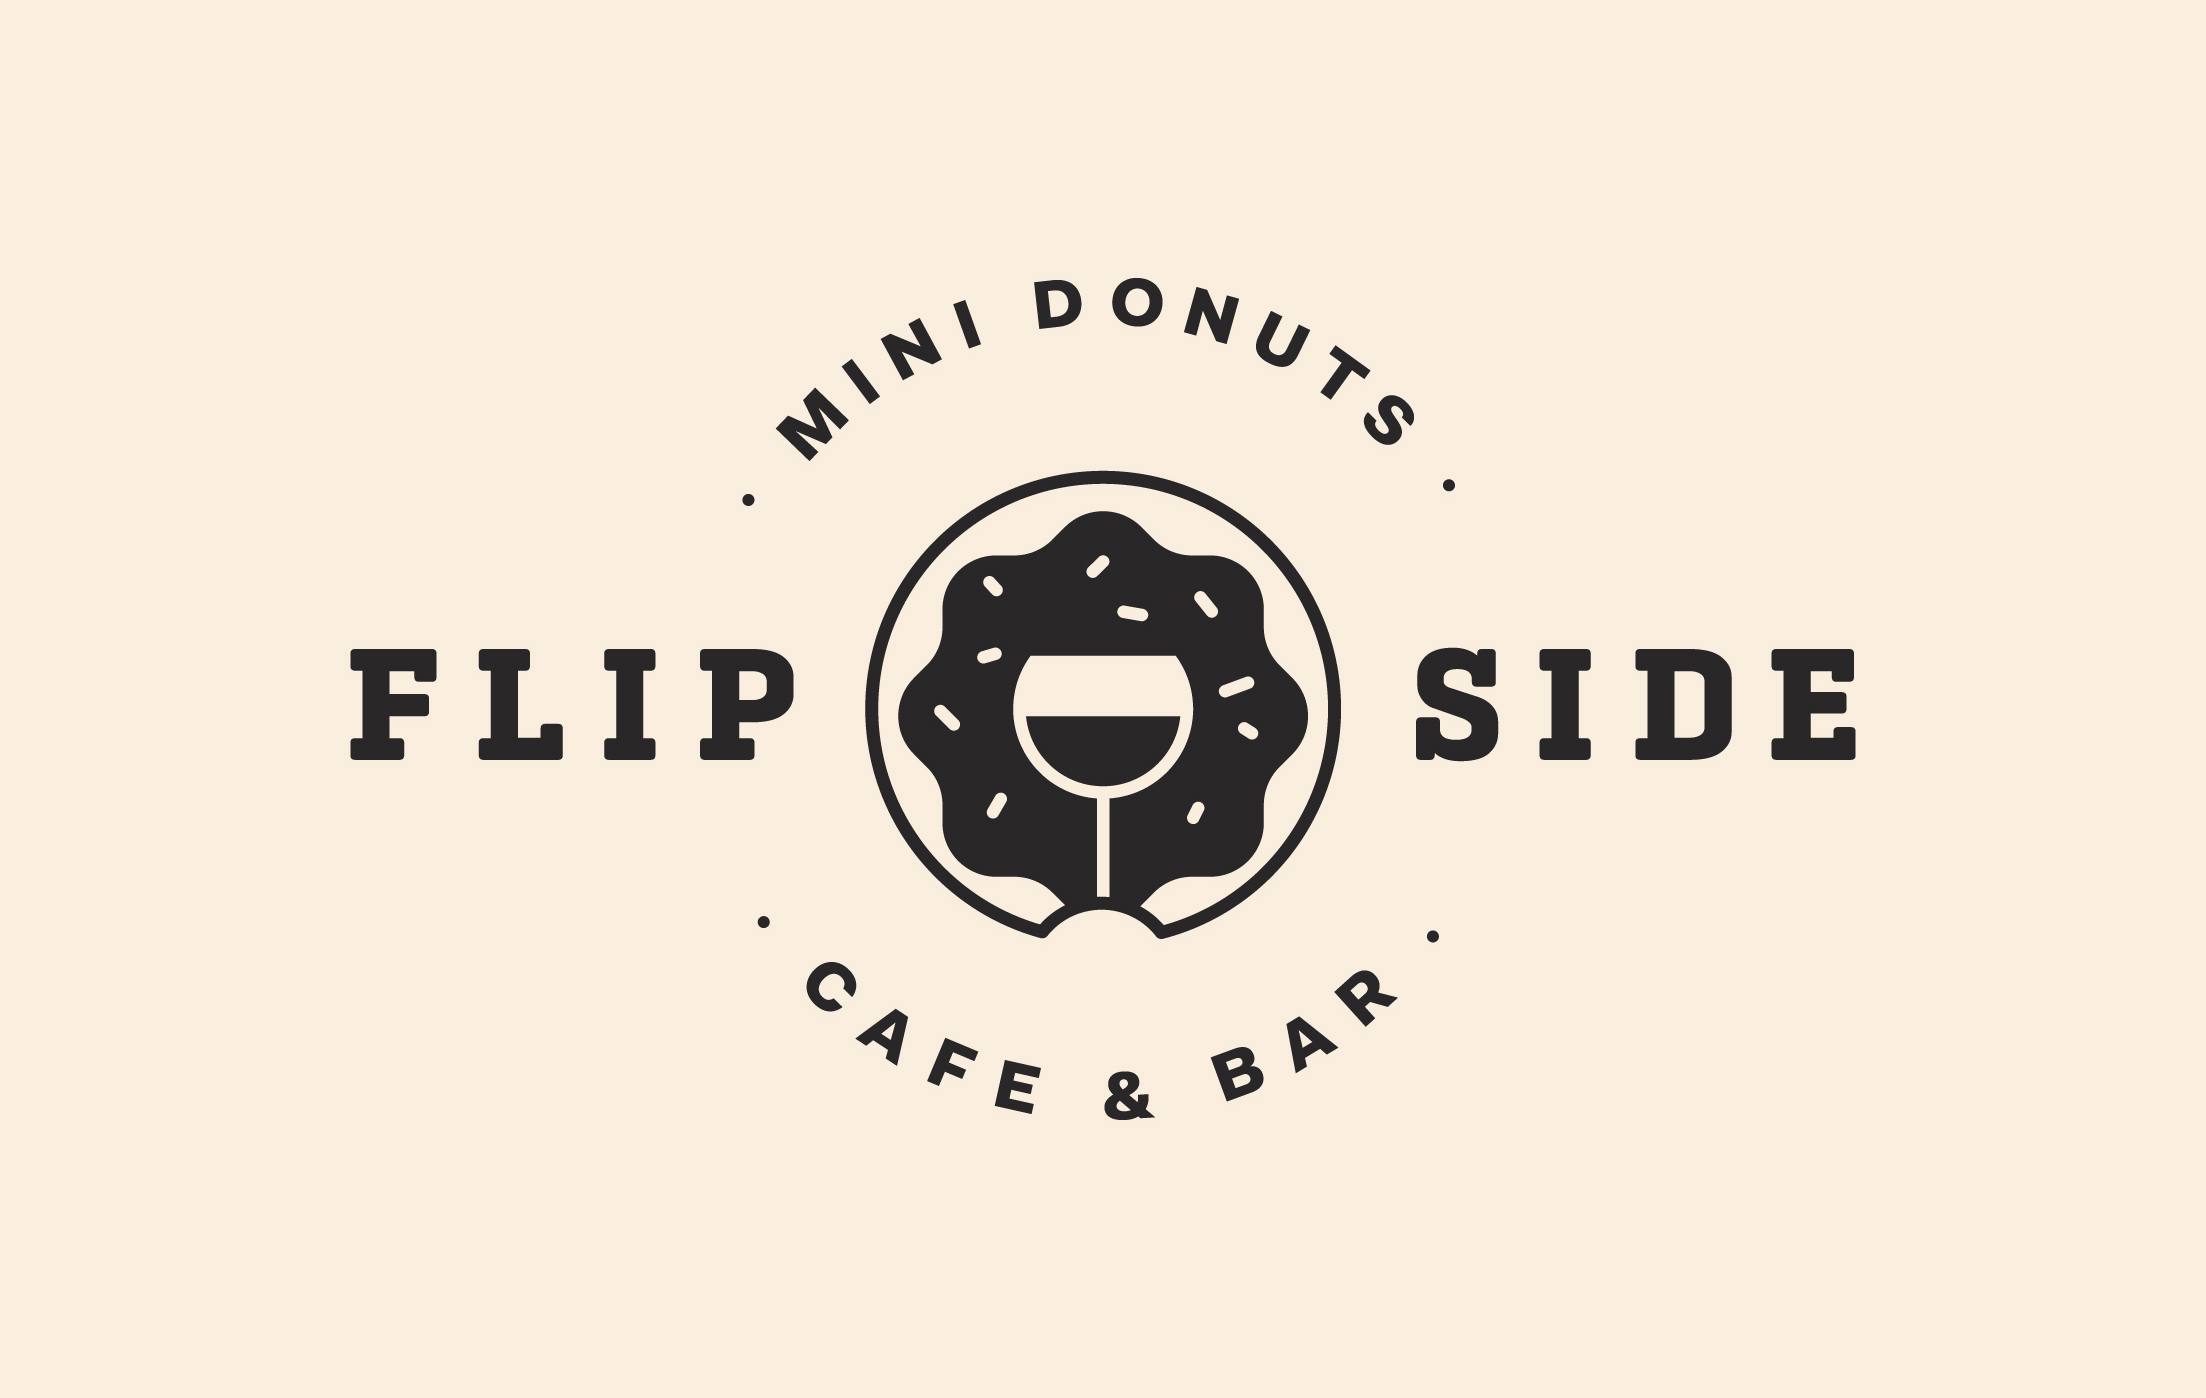 Flipside Donut Bar